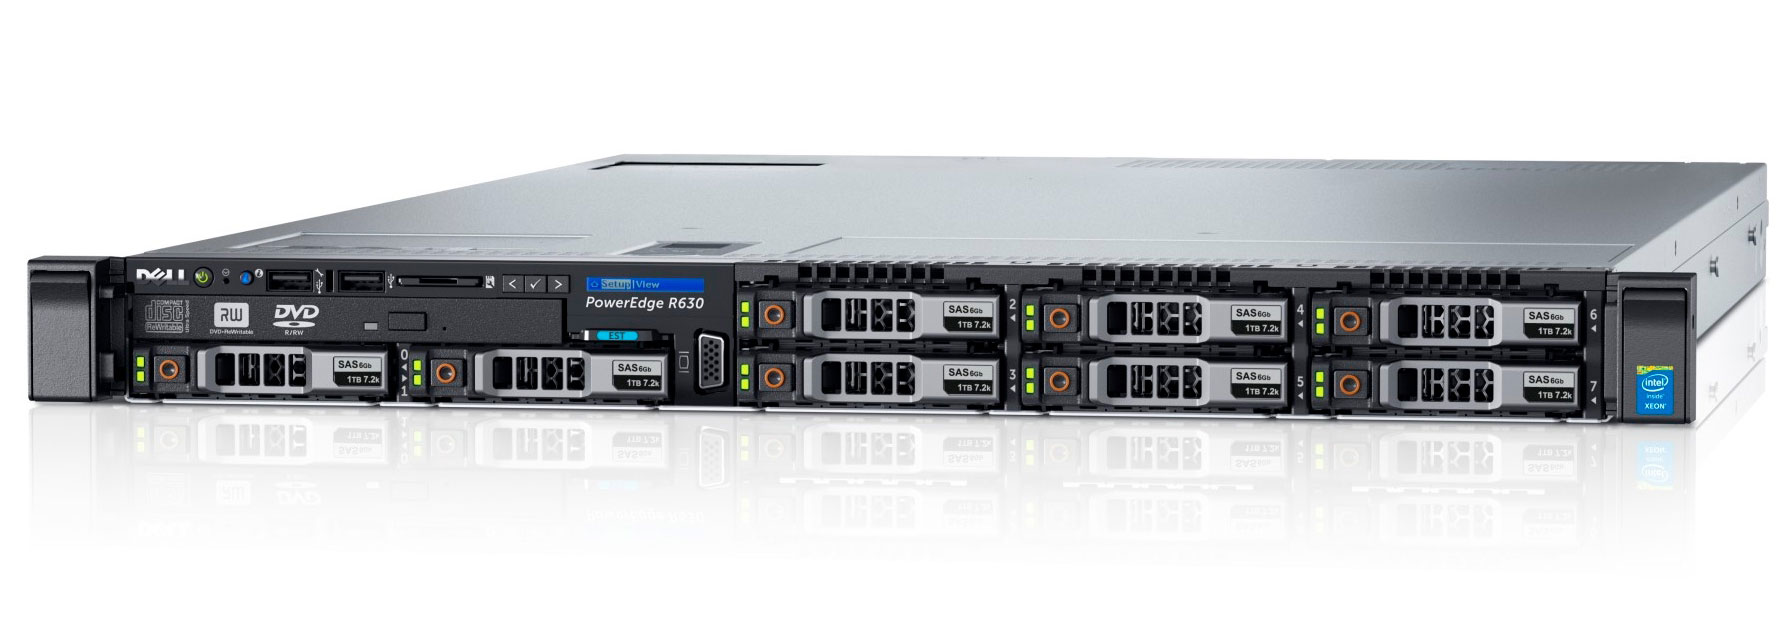 Подробное фото Сервер DELL PowerEdge R630 Xeon 2x E5-2697v3 256Gb 2133P DDR4 8x noHDD 2.5", SAS RAID Perc H730, 1024Mb, DVD, 2*PSU